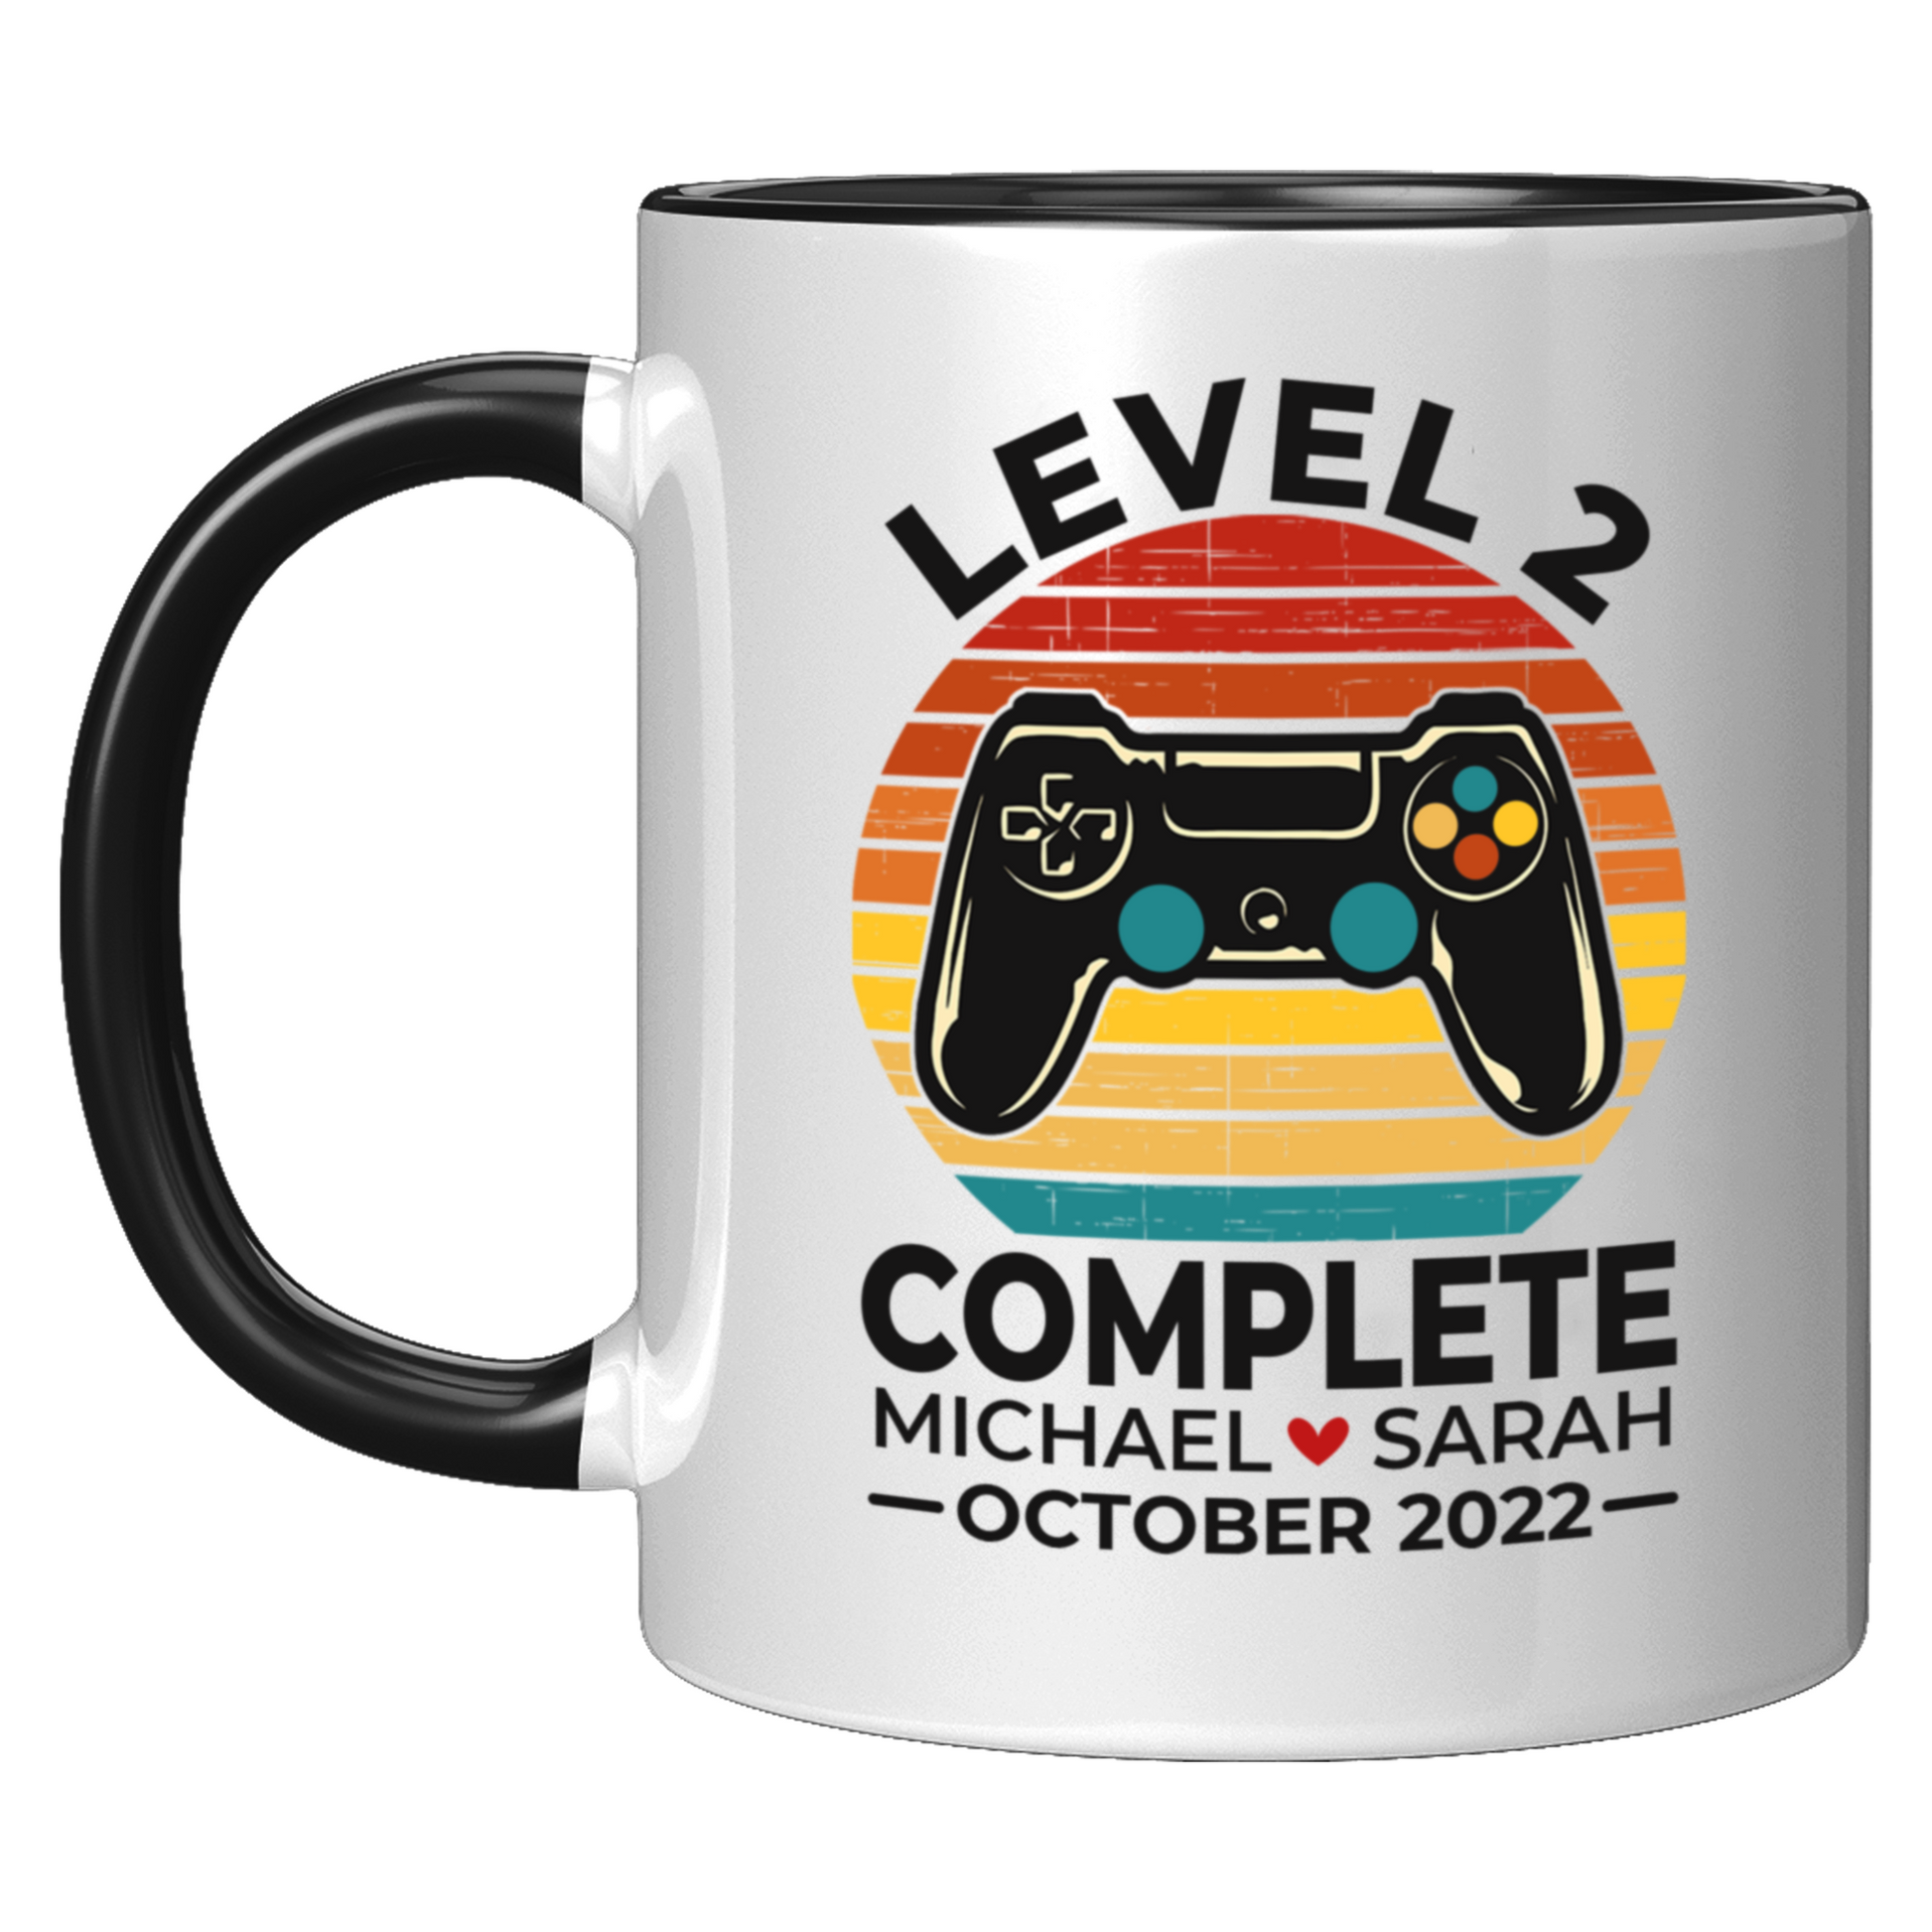 Level 2 Complete Video Game Anniversary Mug